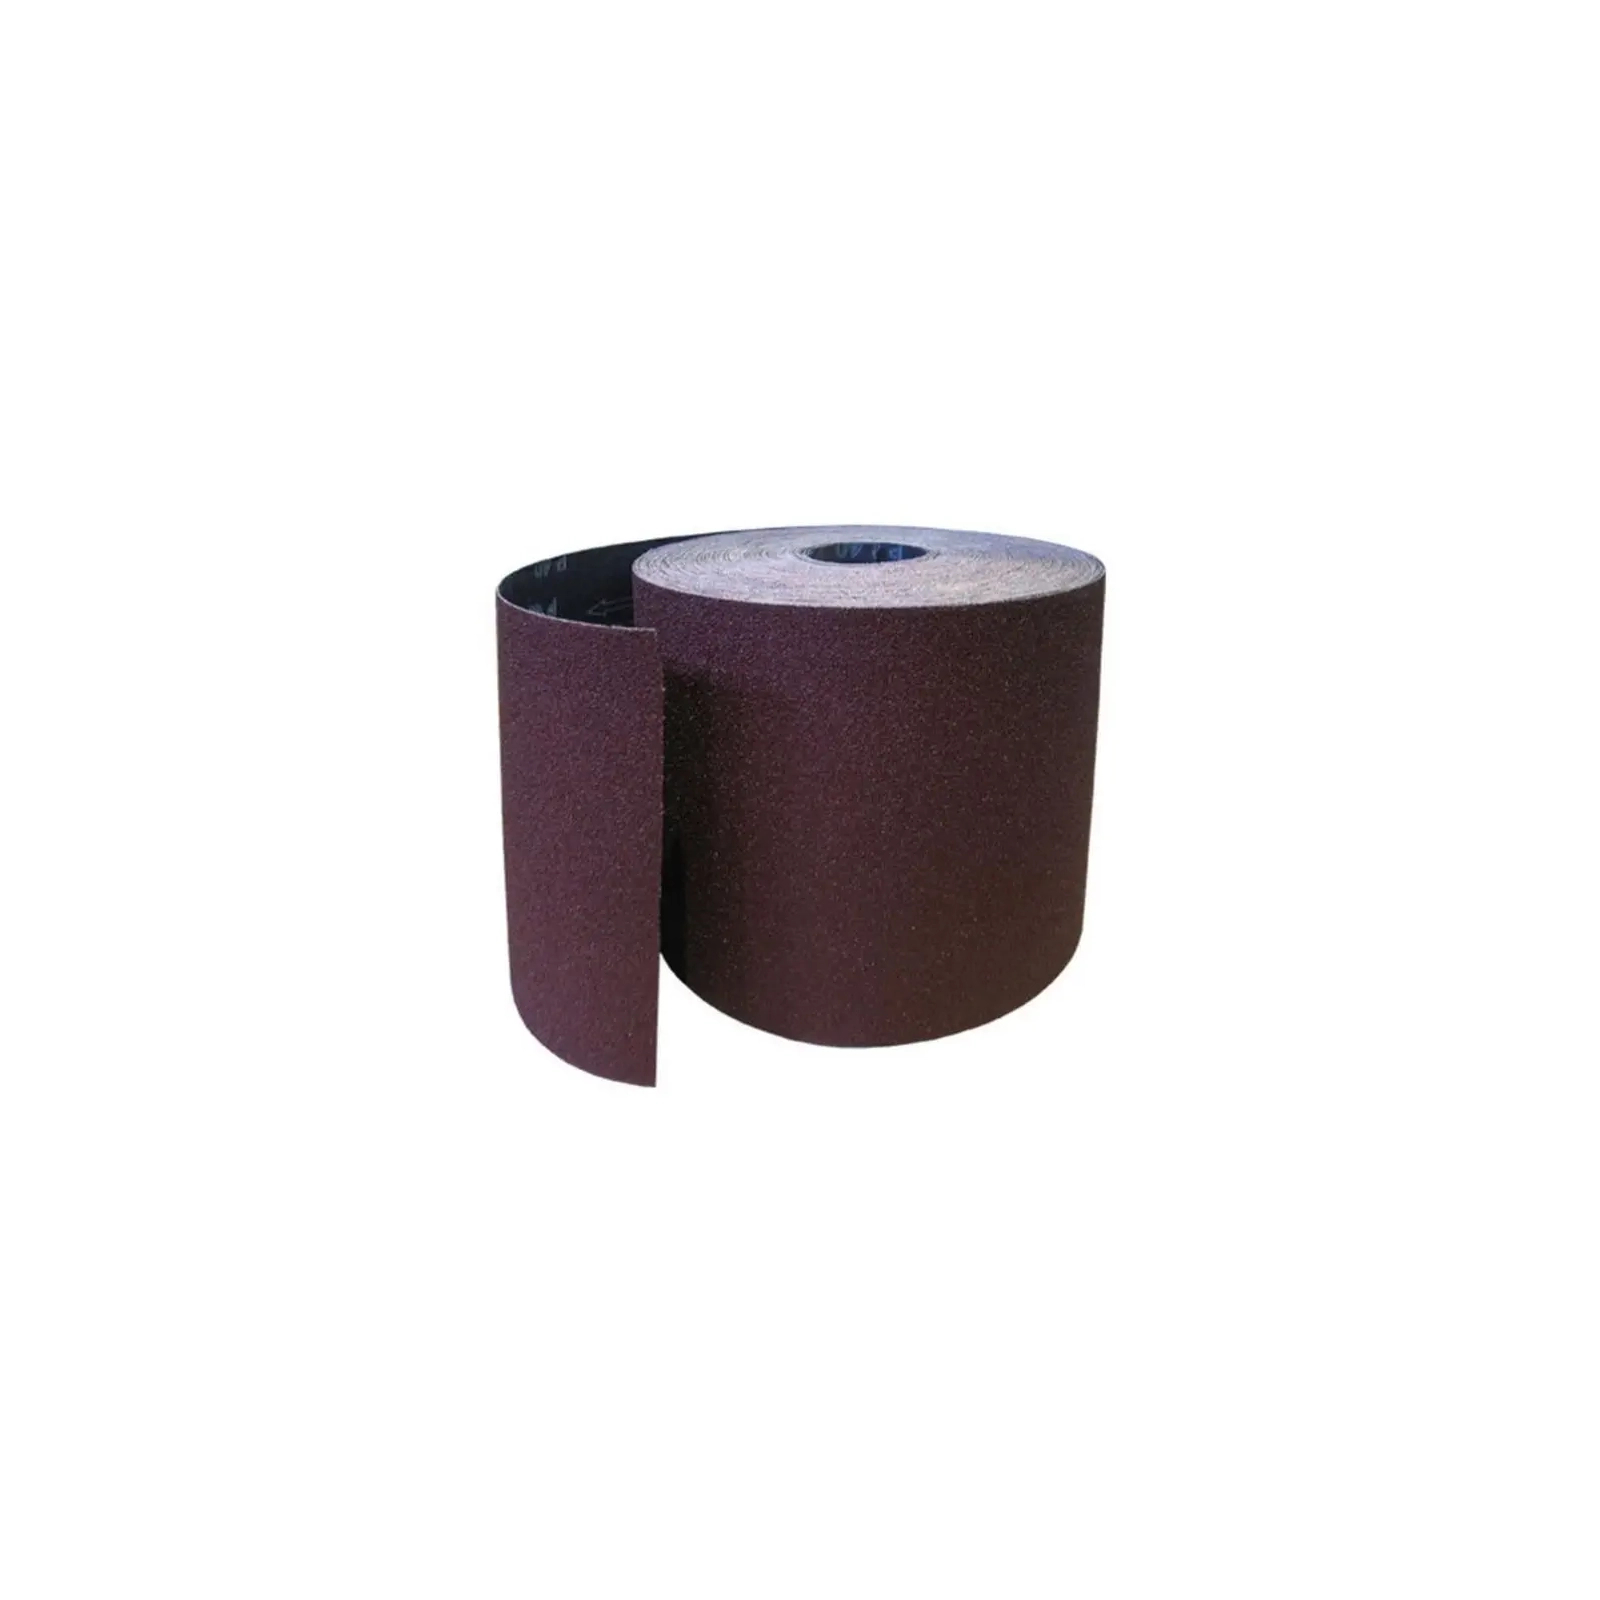 Наждачная бумага Werk тканевое основание - 200мм х 50м, К120 (62380)